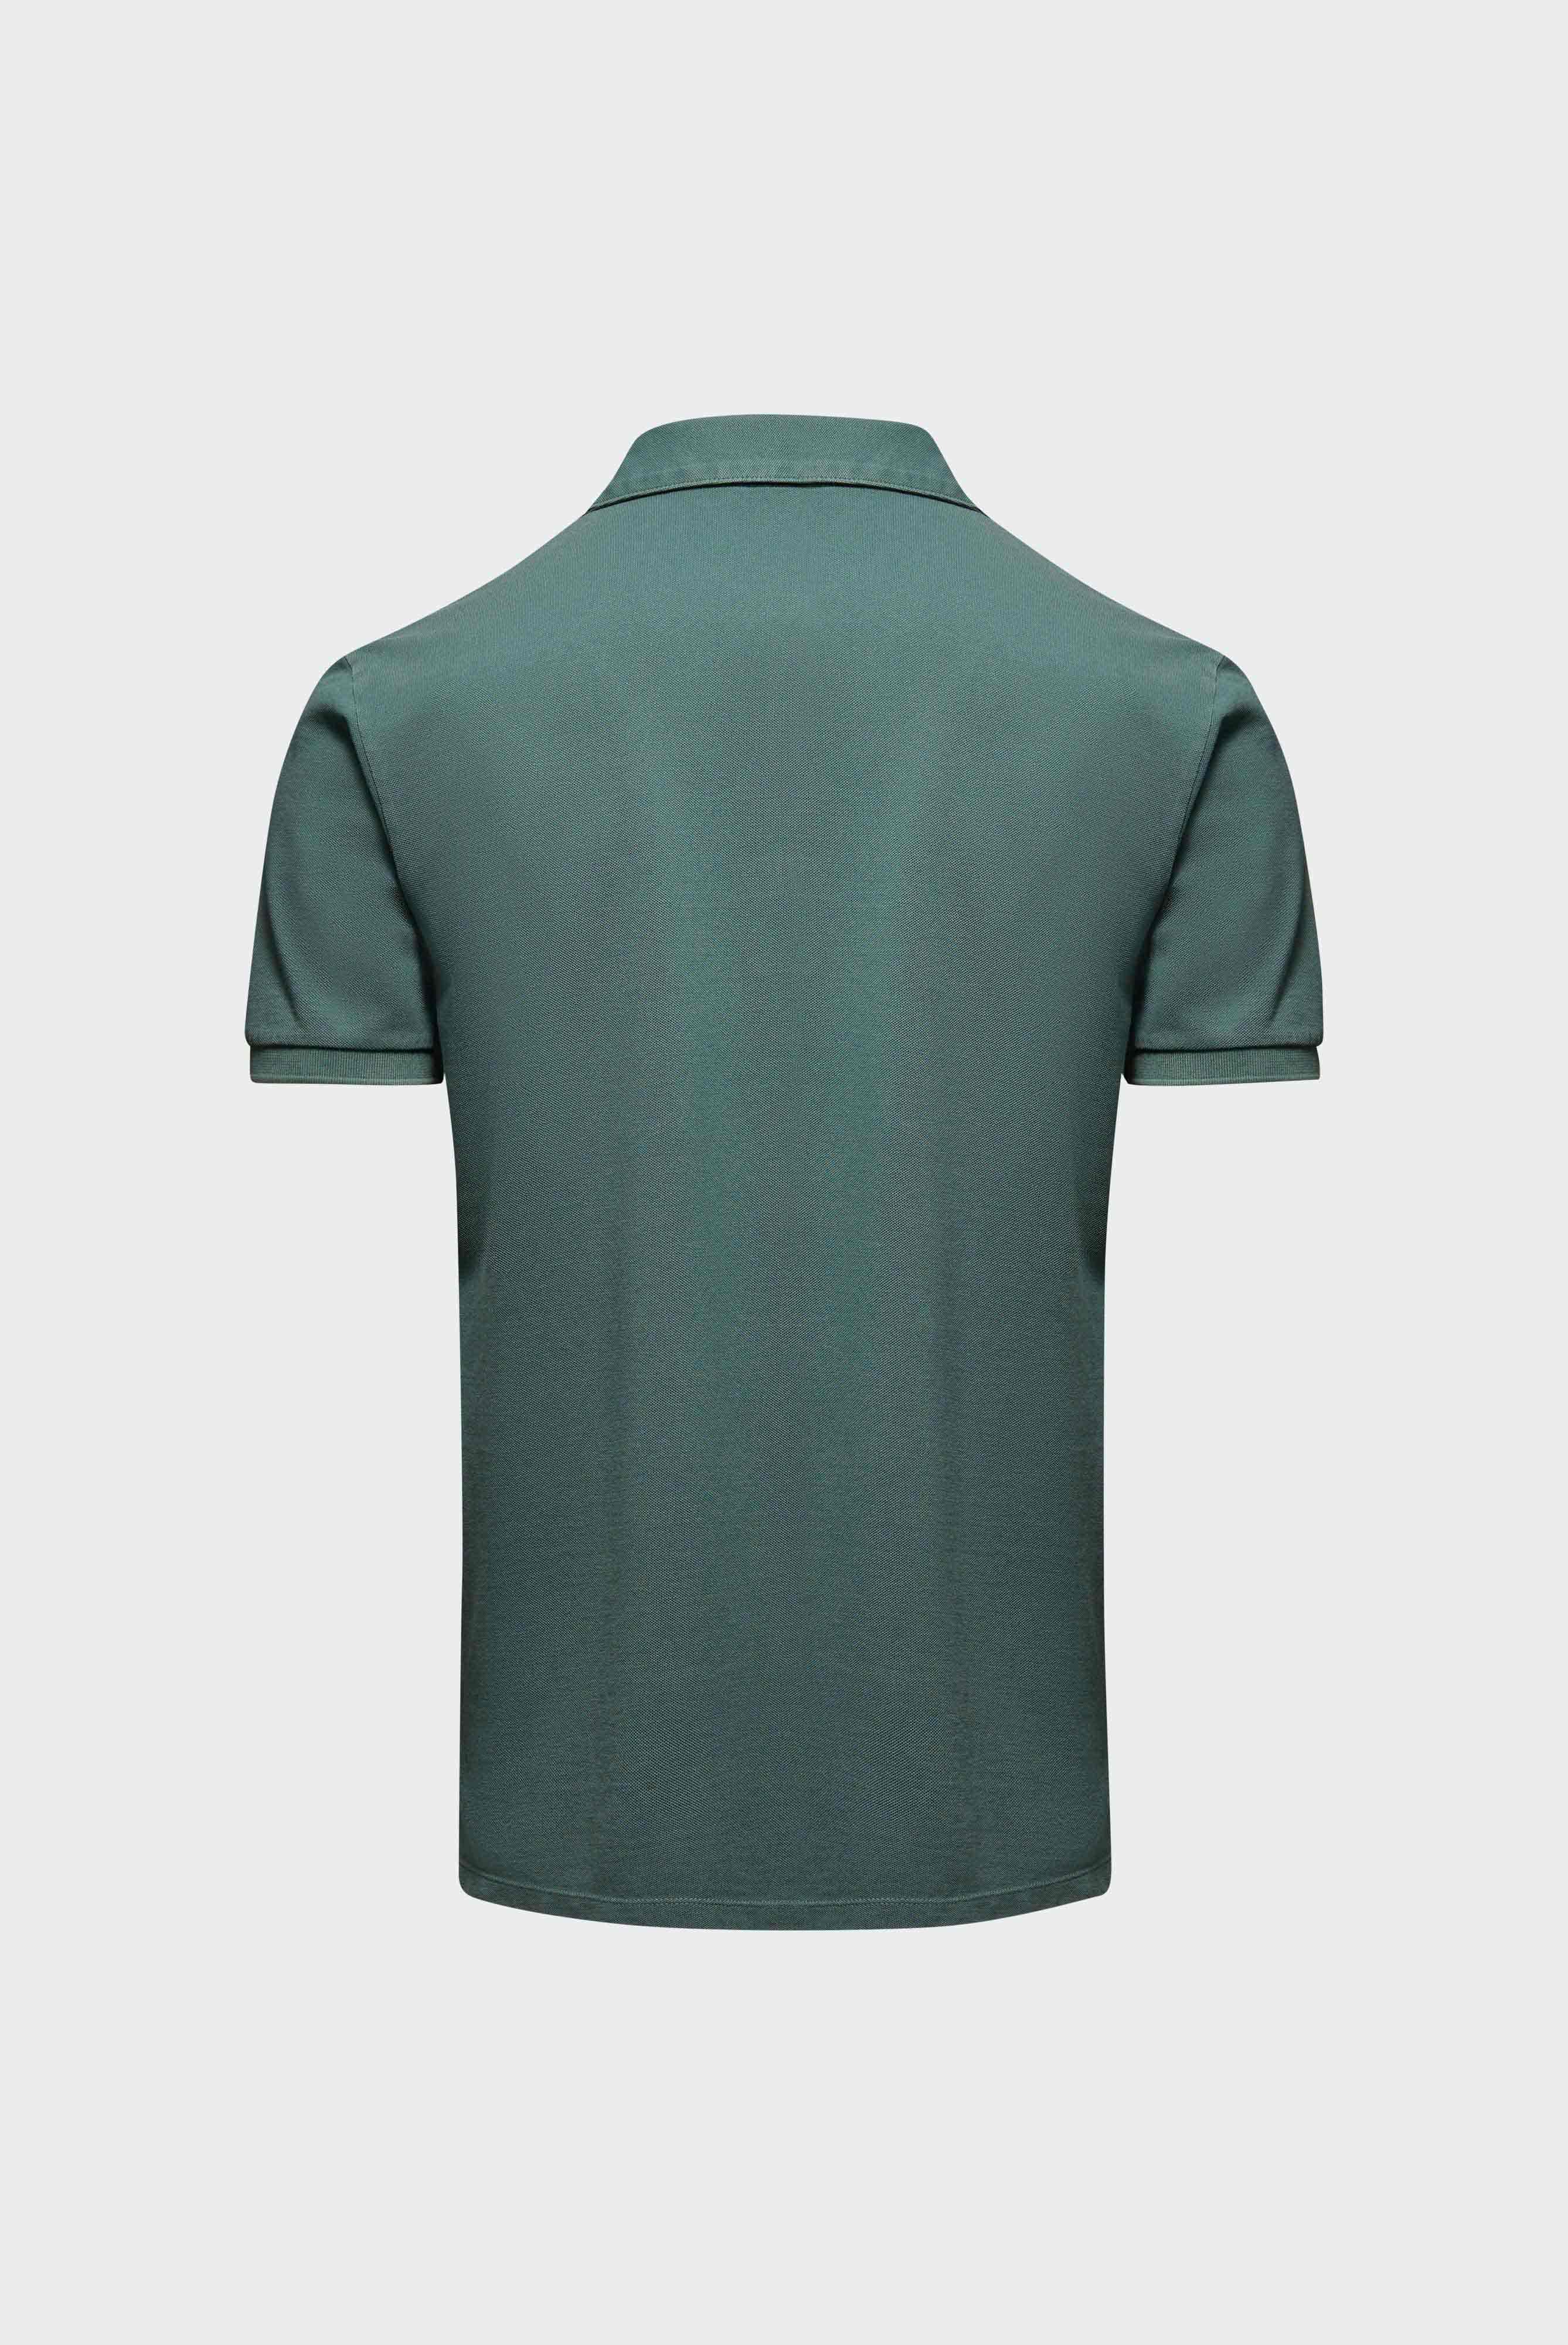 Poloshirts+Garment-Dyed Piqué Polohemd+20.1650..Z20047.980.S